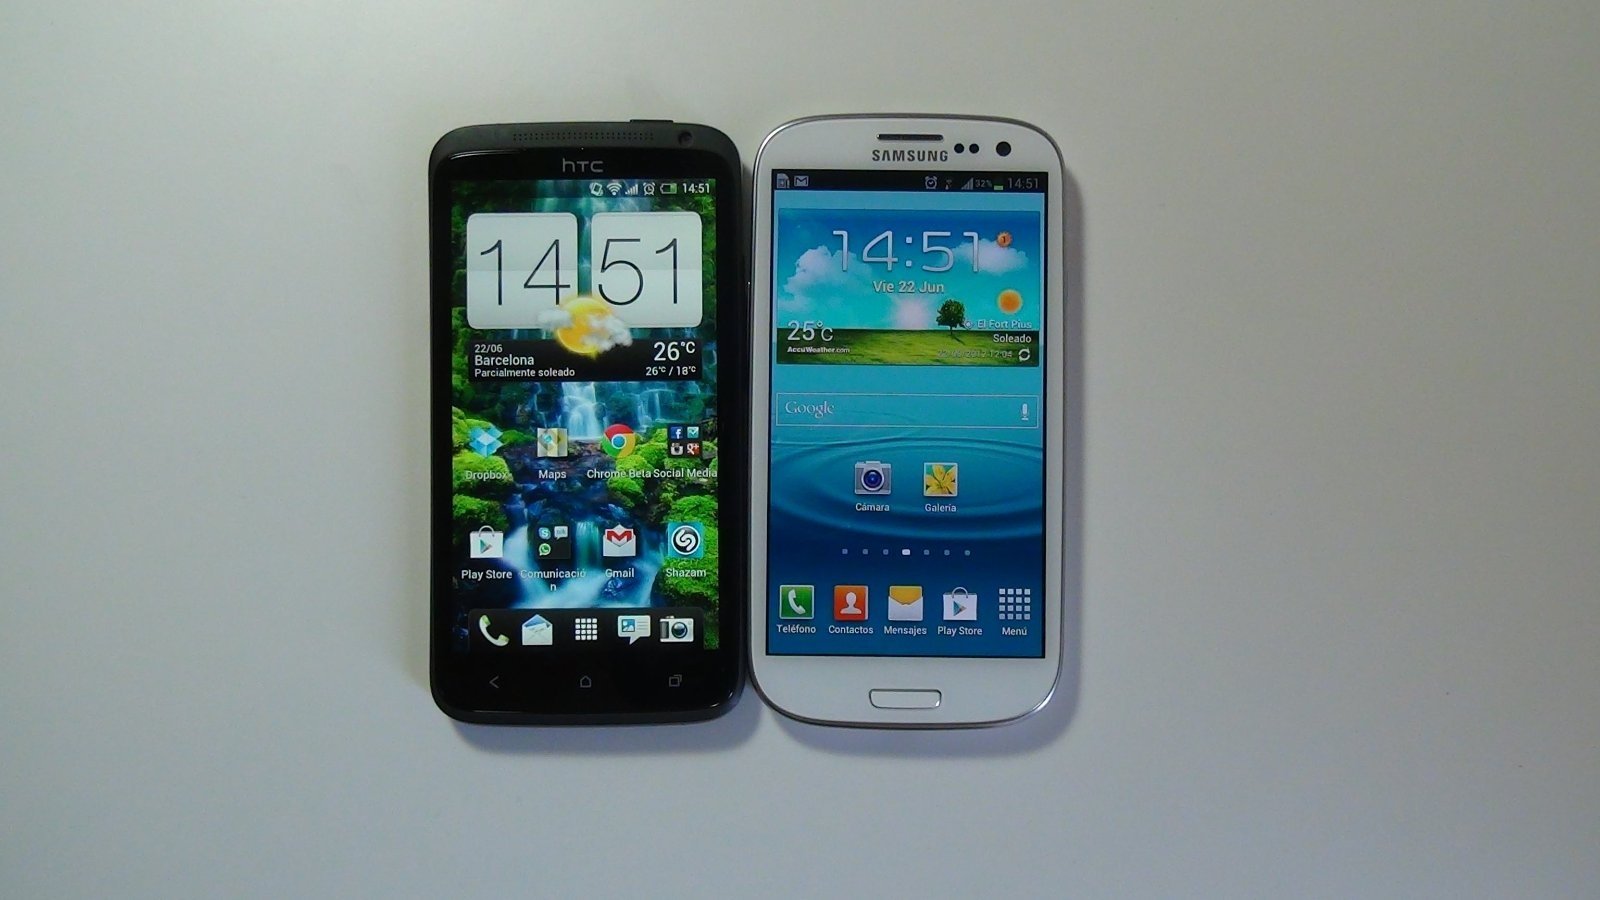 HTC One X vs Samsung Galaxy S III